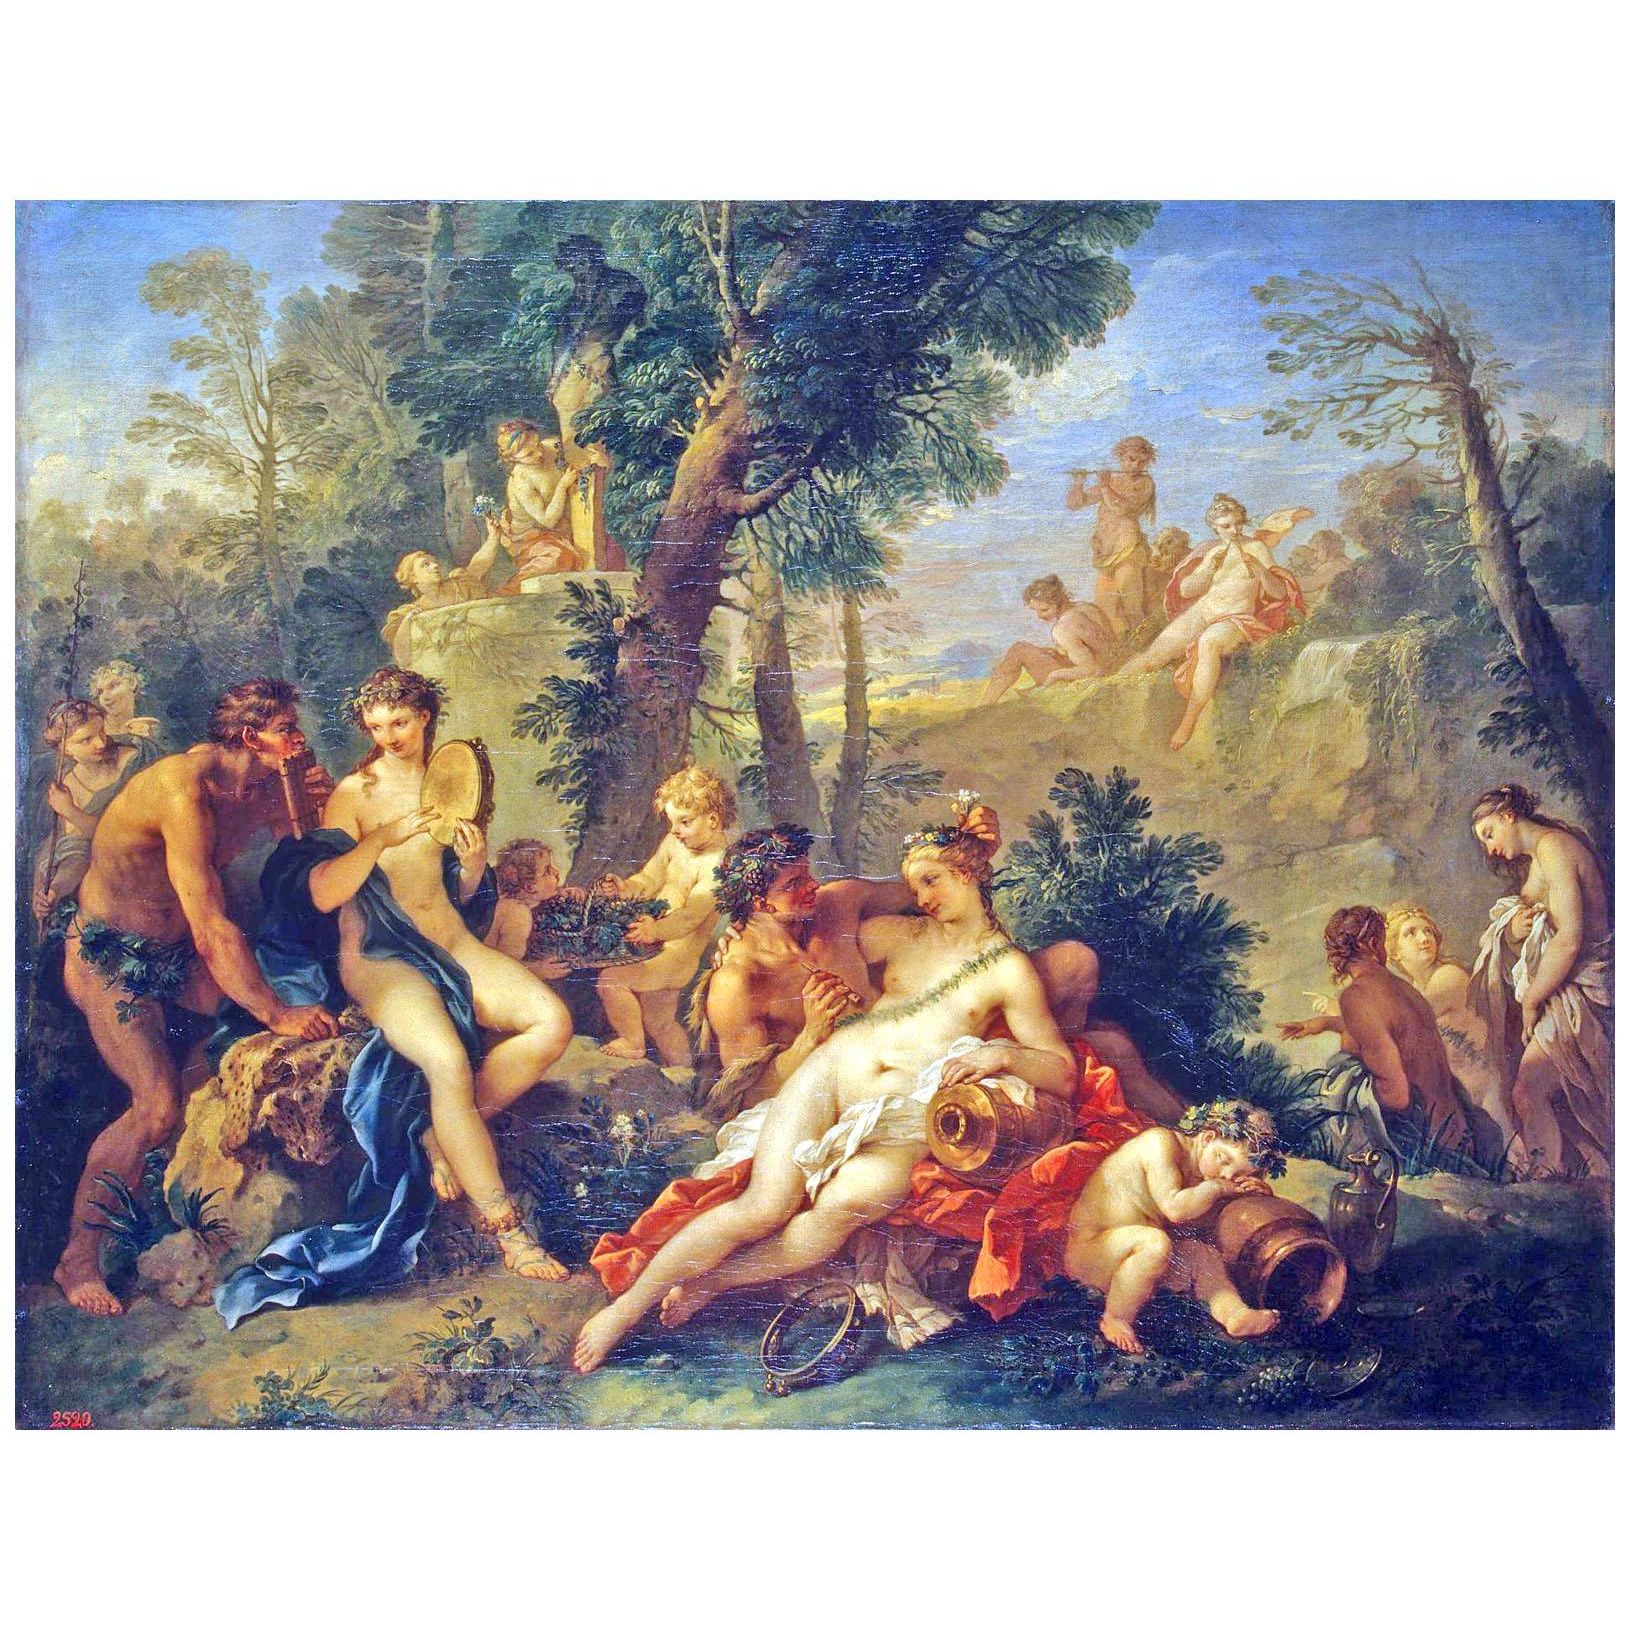 Charles-Joseph Natoire. Bacchus et Ariadne. 1742. Hermitage